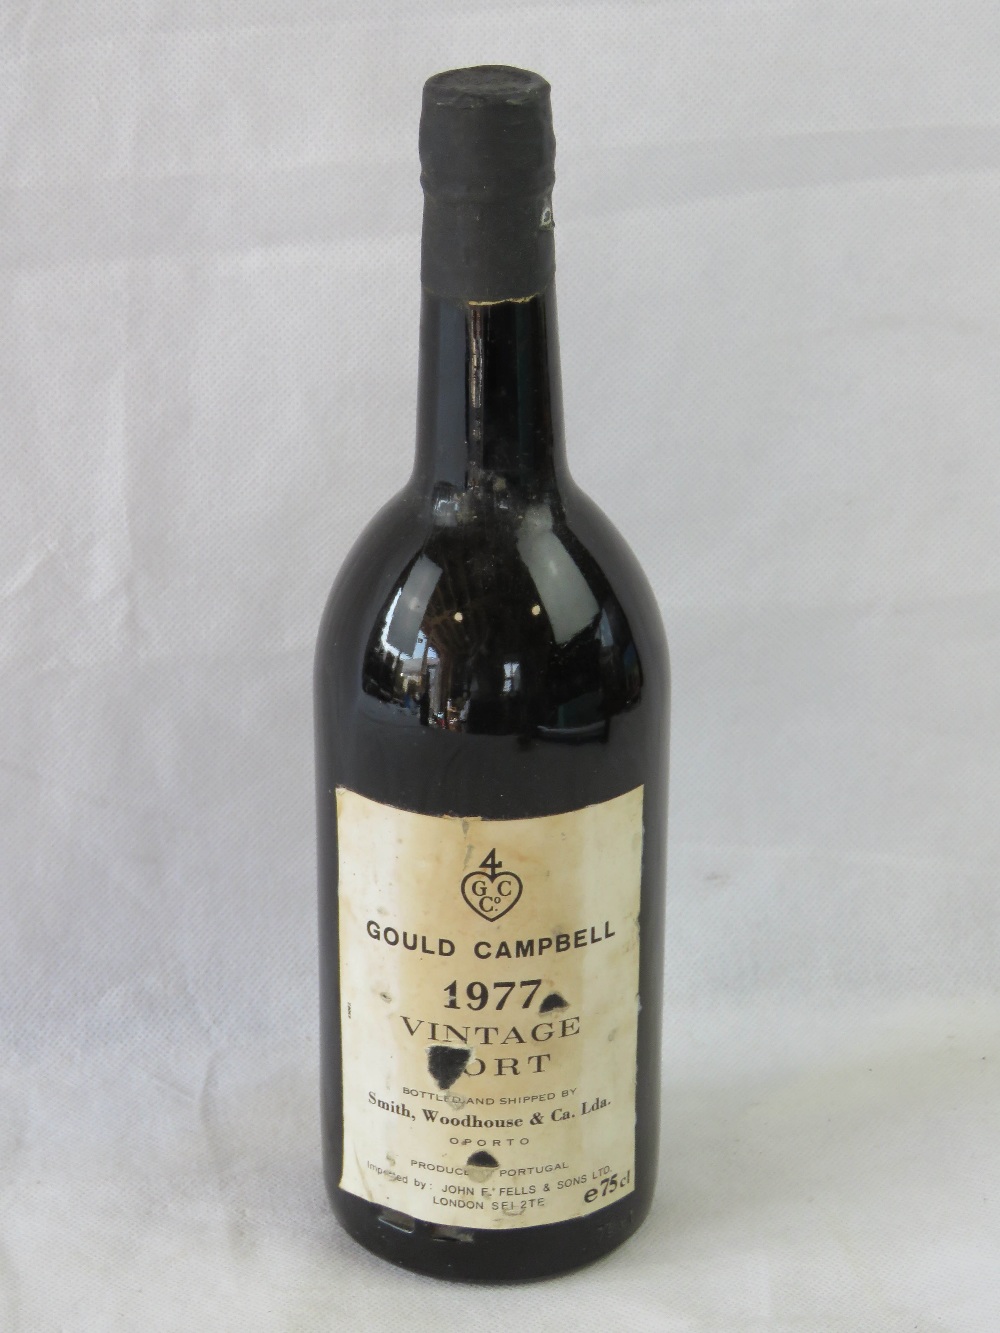 A bottle of Gould Campbell 1977 Vintage Port, 75cl, Origin: Douro, Portugal.